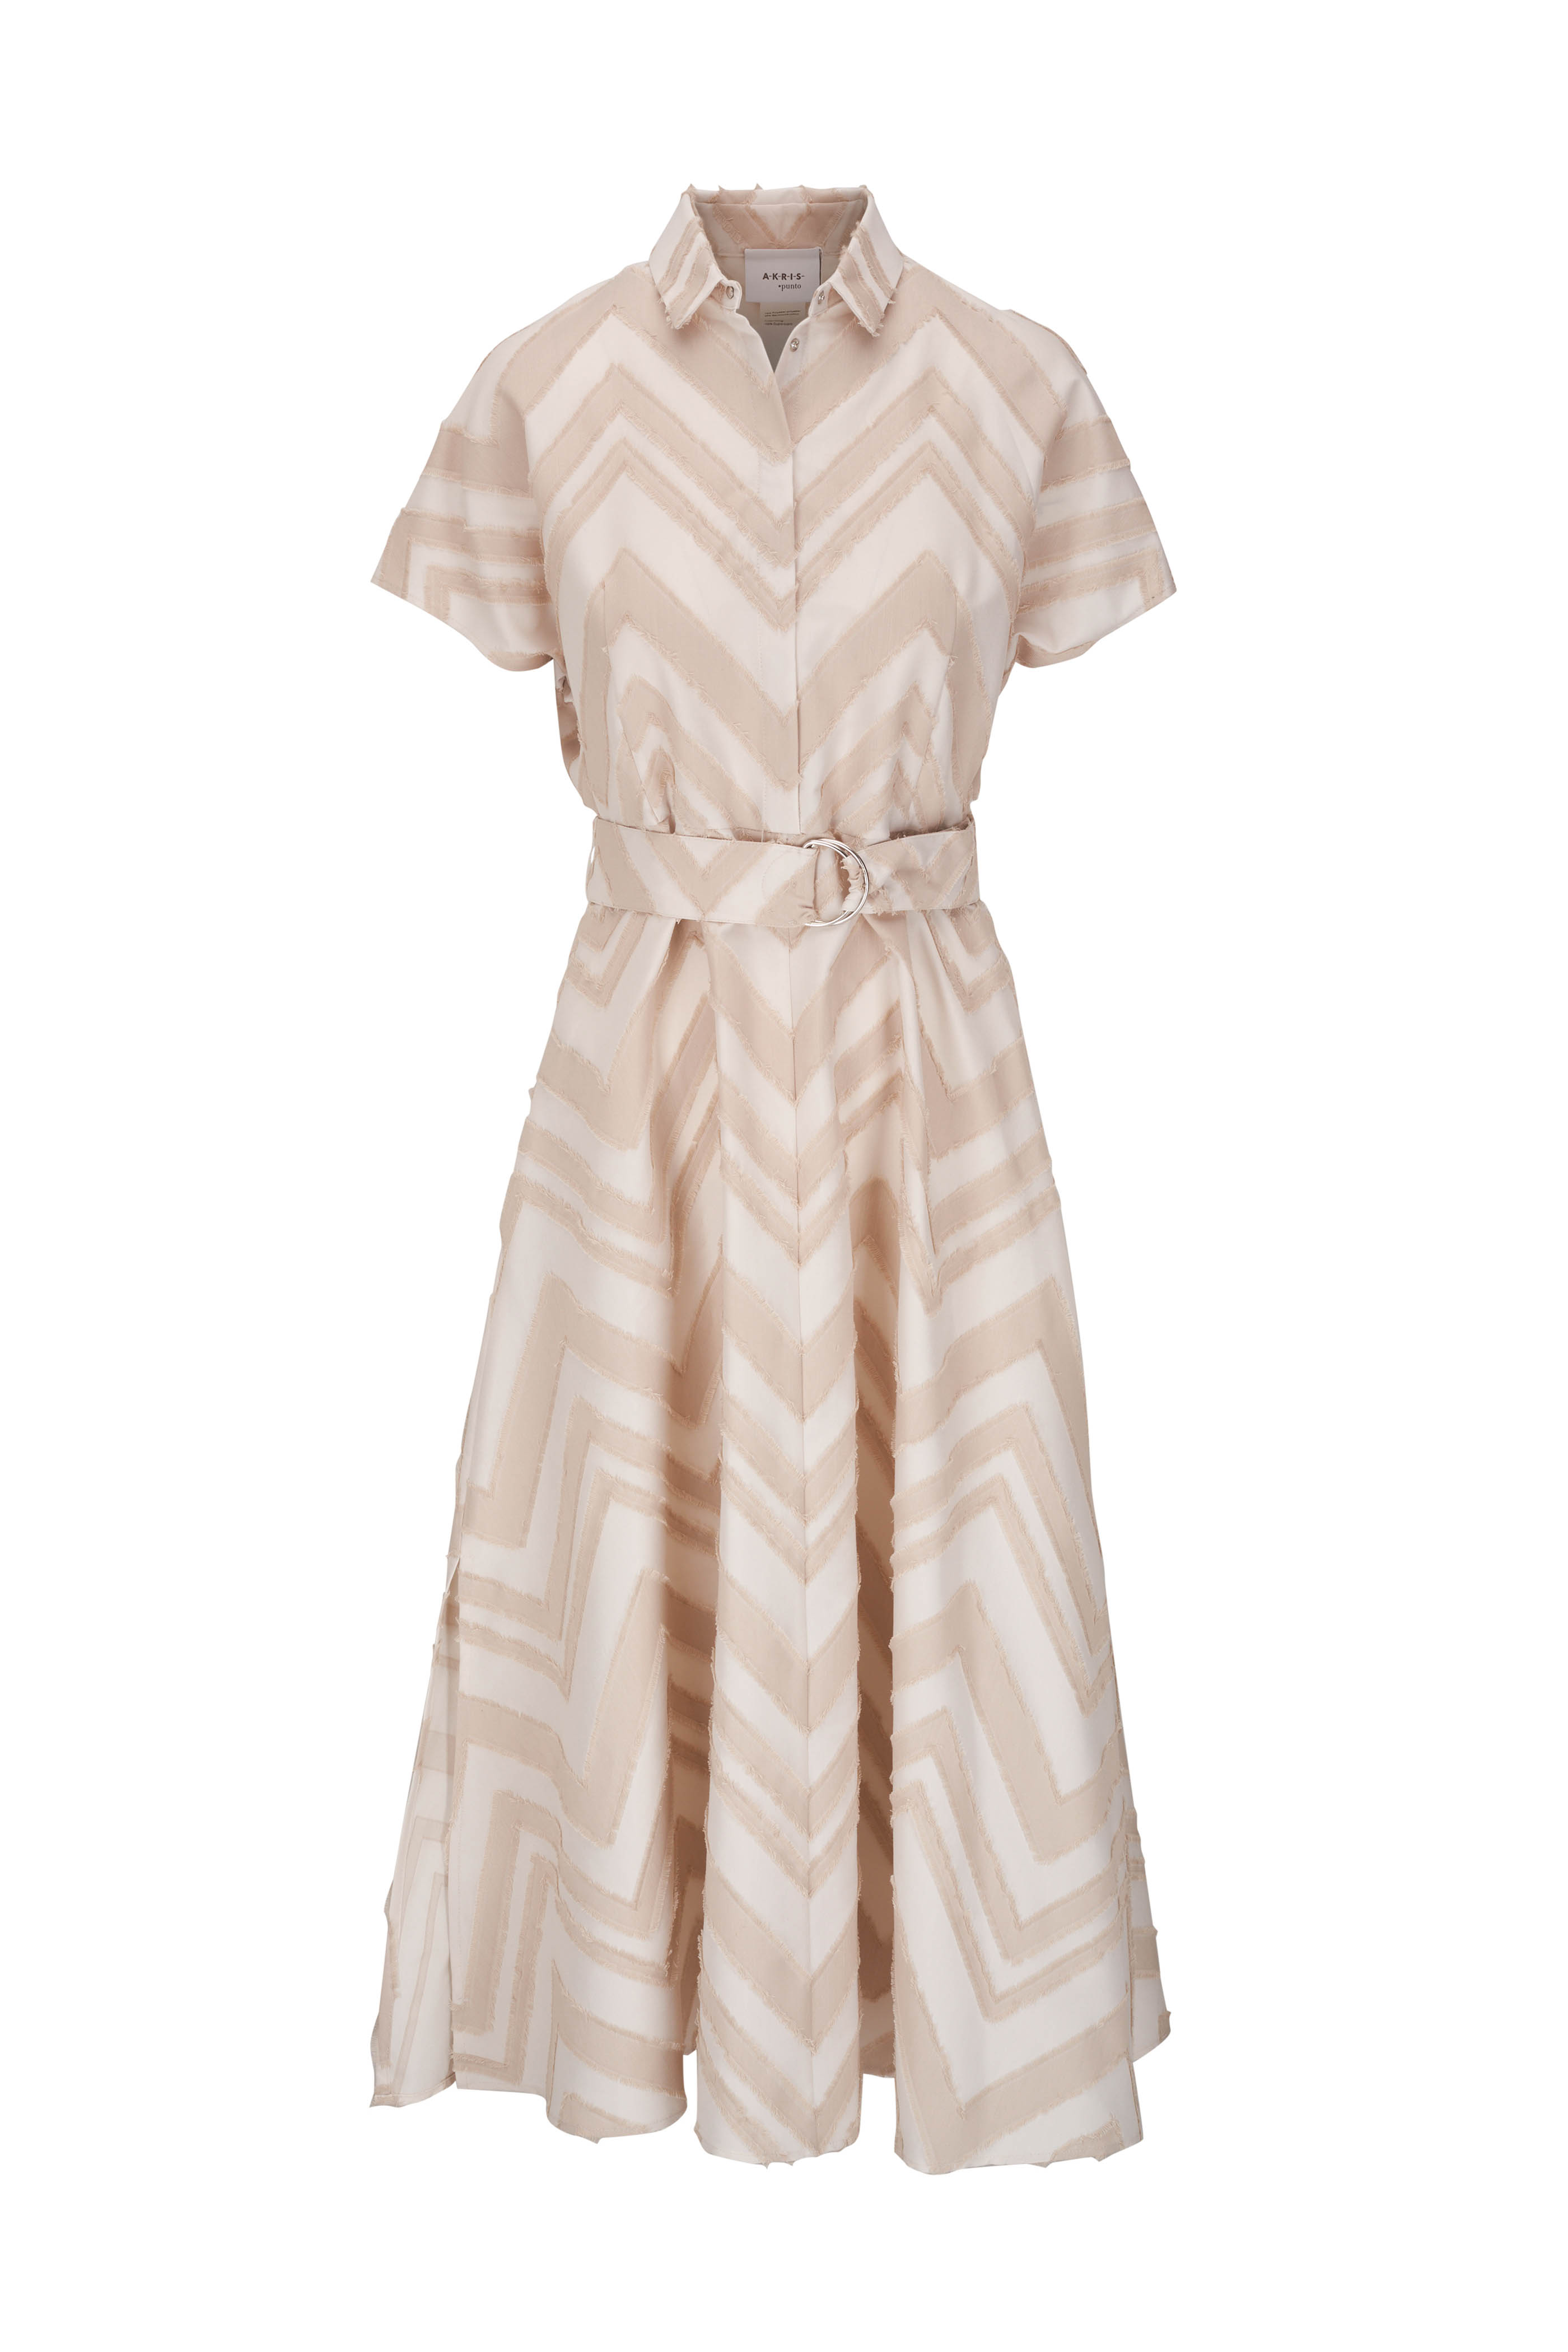 Louis Vuitton Python-effect Monogram Jacquard Polo Dress White. Size Xs